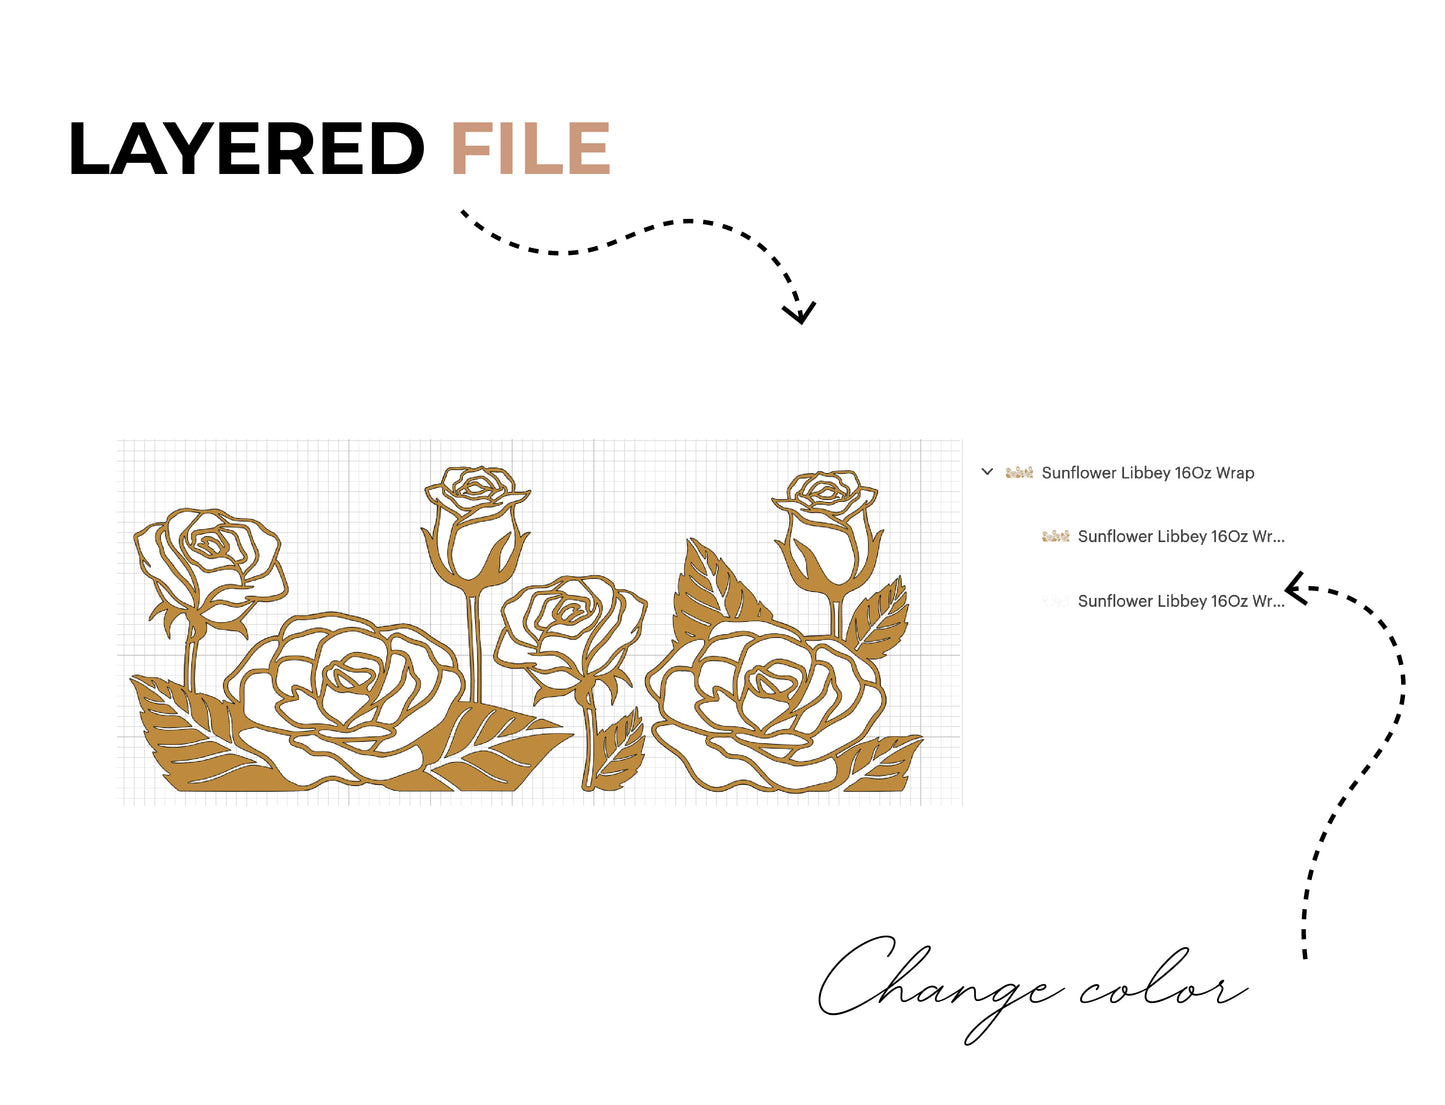 Layered Roses Wrap